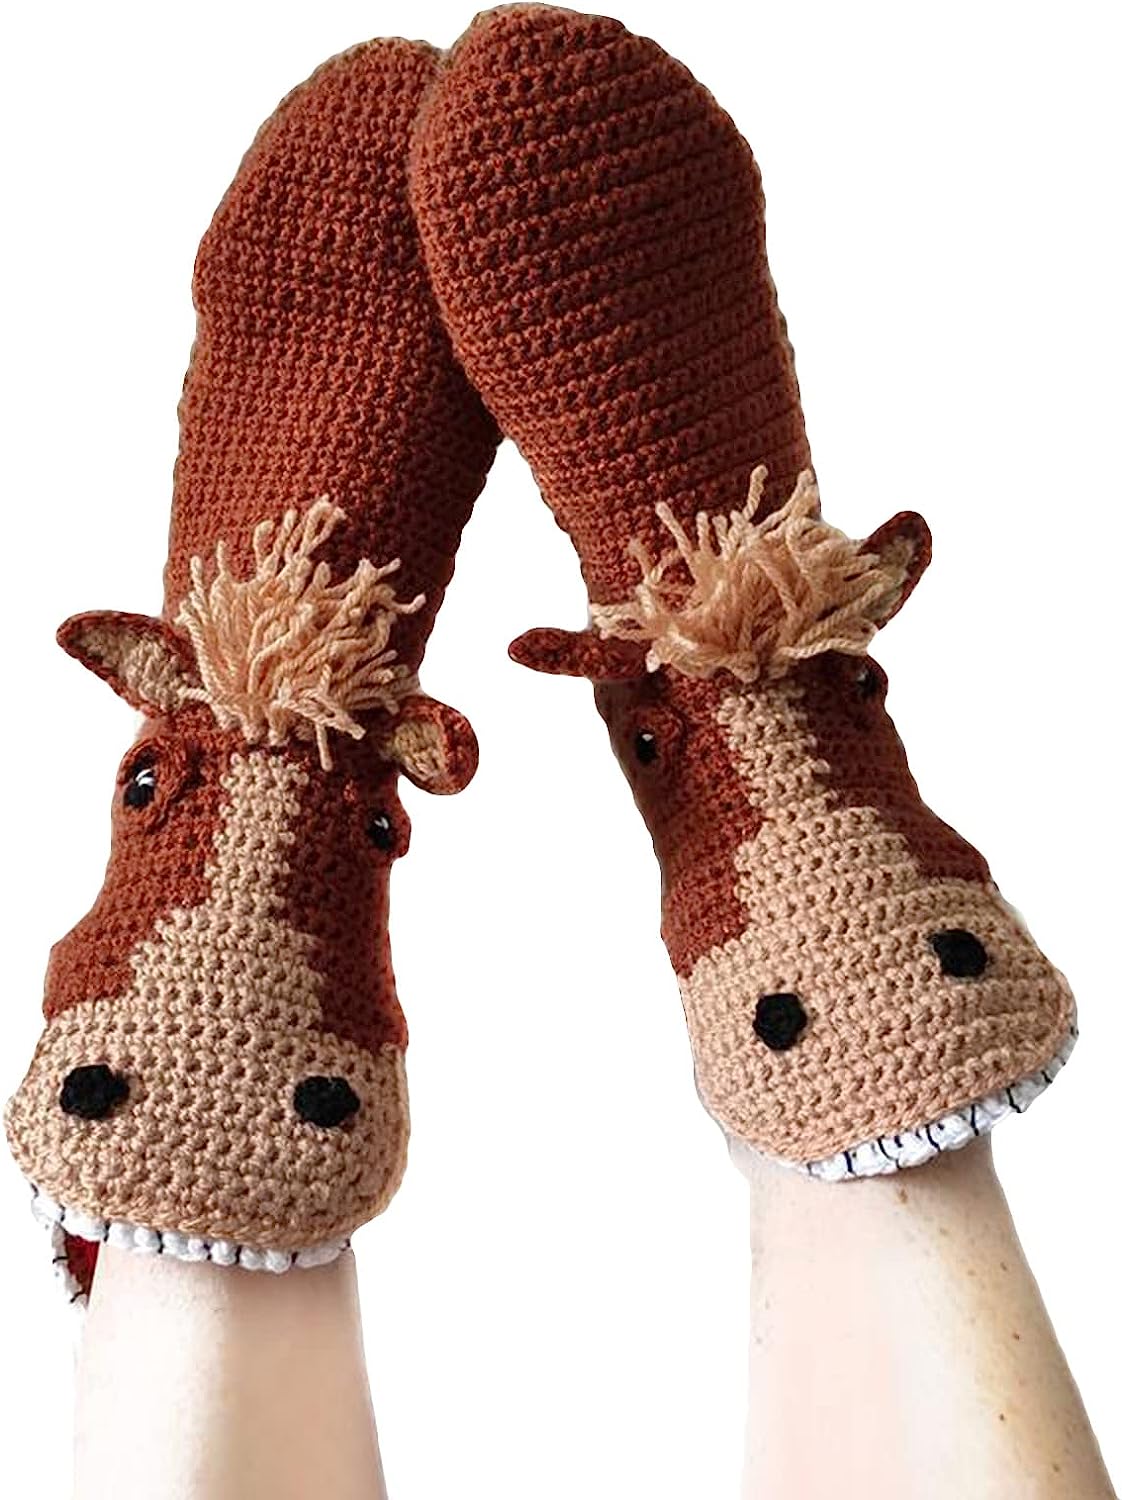 THATLILSHOP One Size / Hippo Women Men Novelty Animal Pattern Socks Crazy Funny Knit Crocodile Socks Funny Gifts